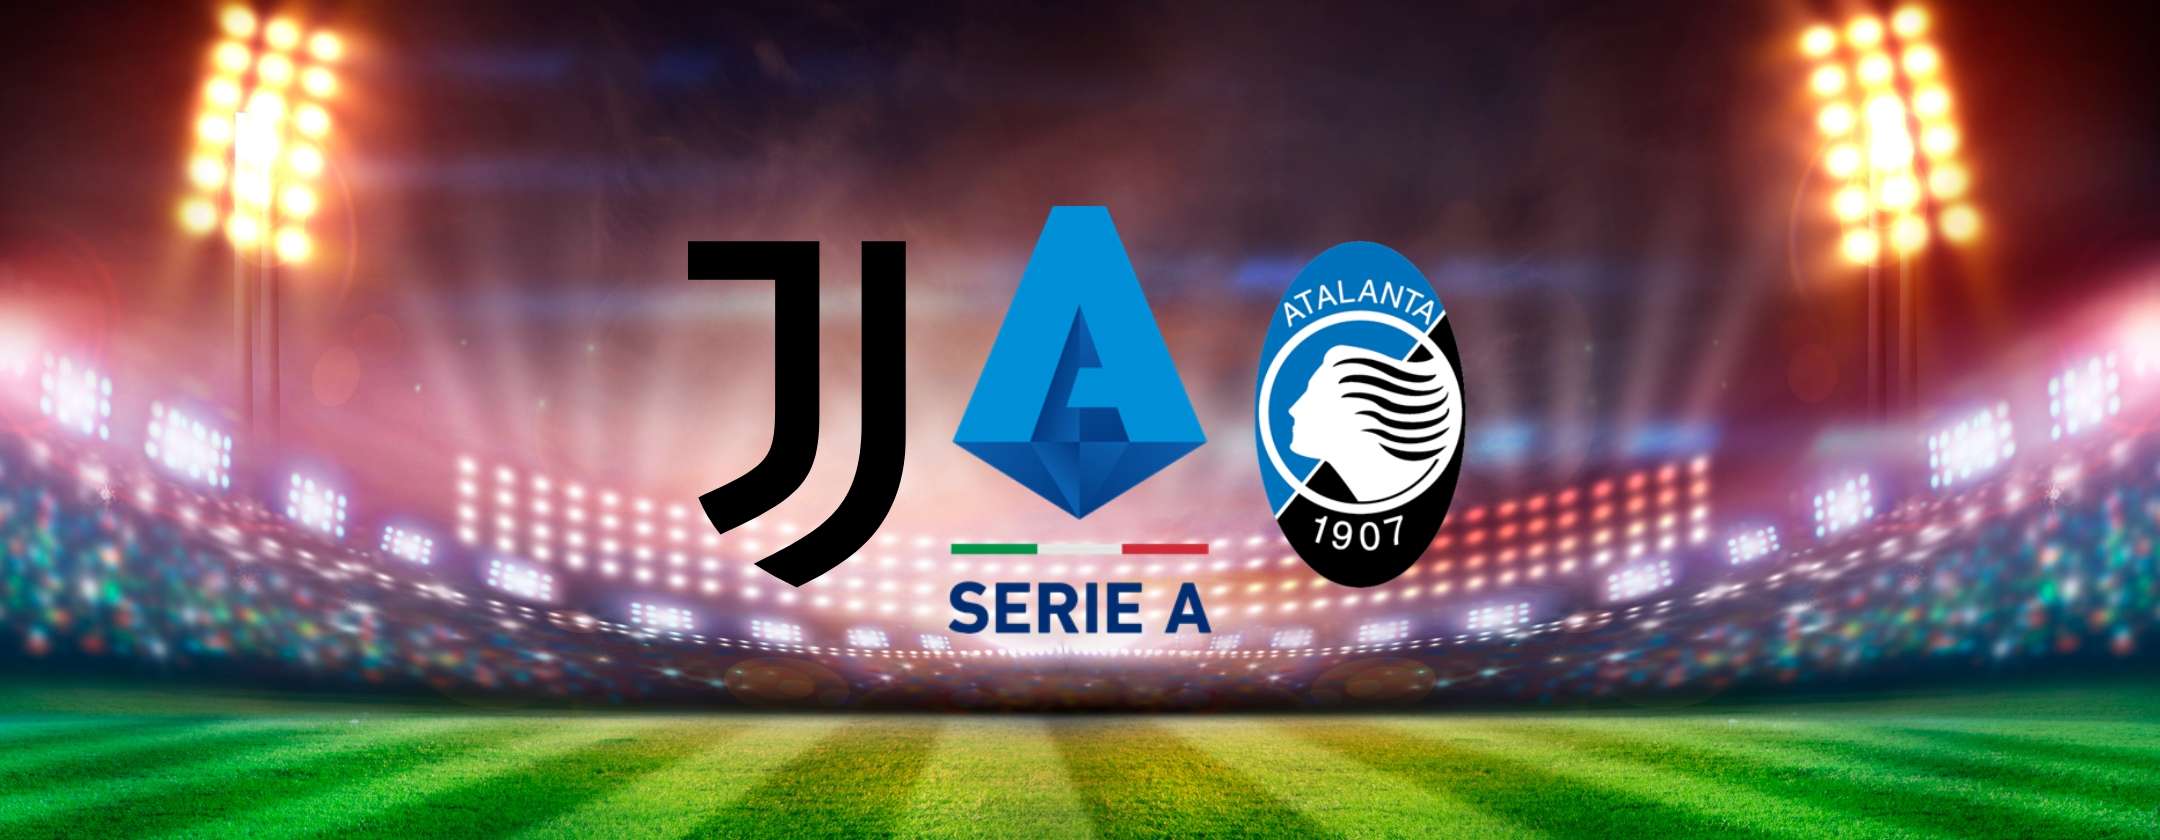 Come vedere Juventus-Atalanta in streaming dallestero